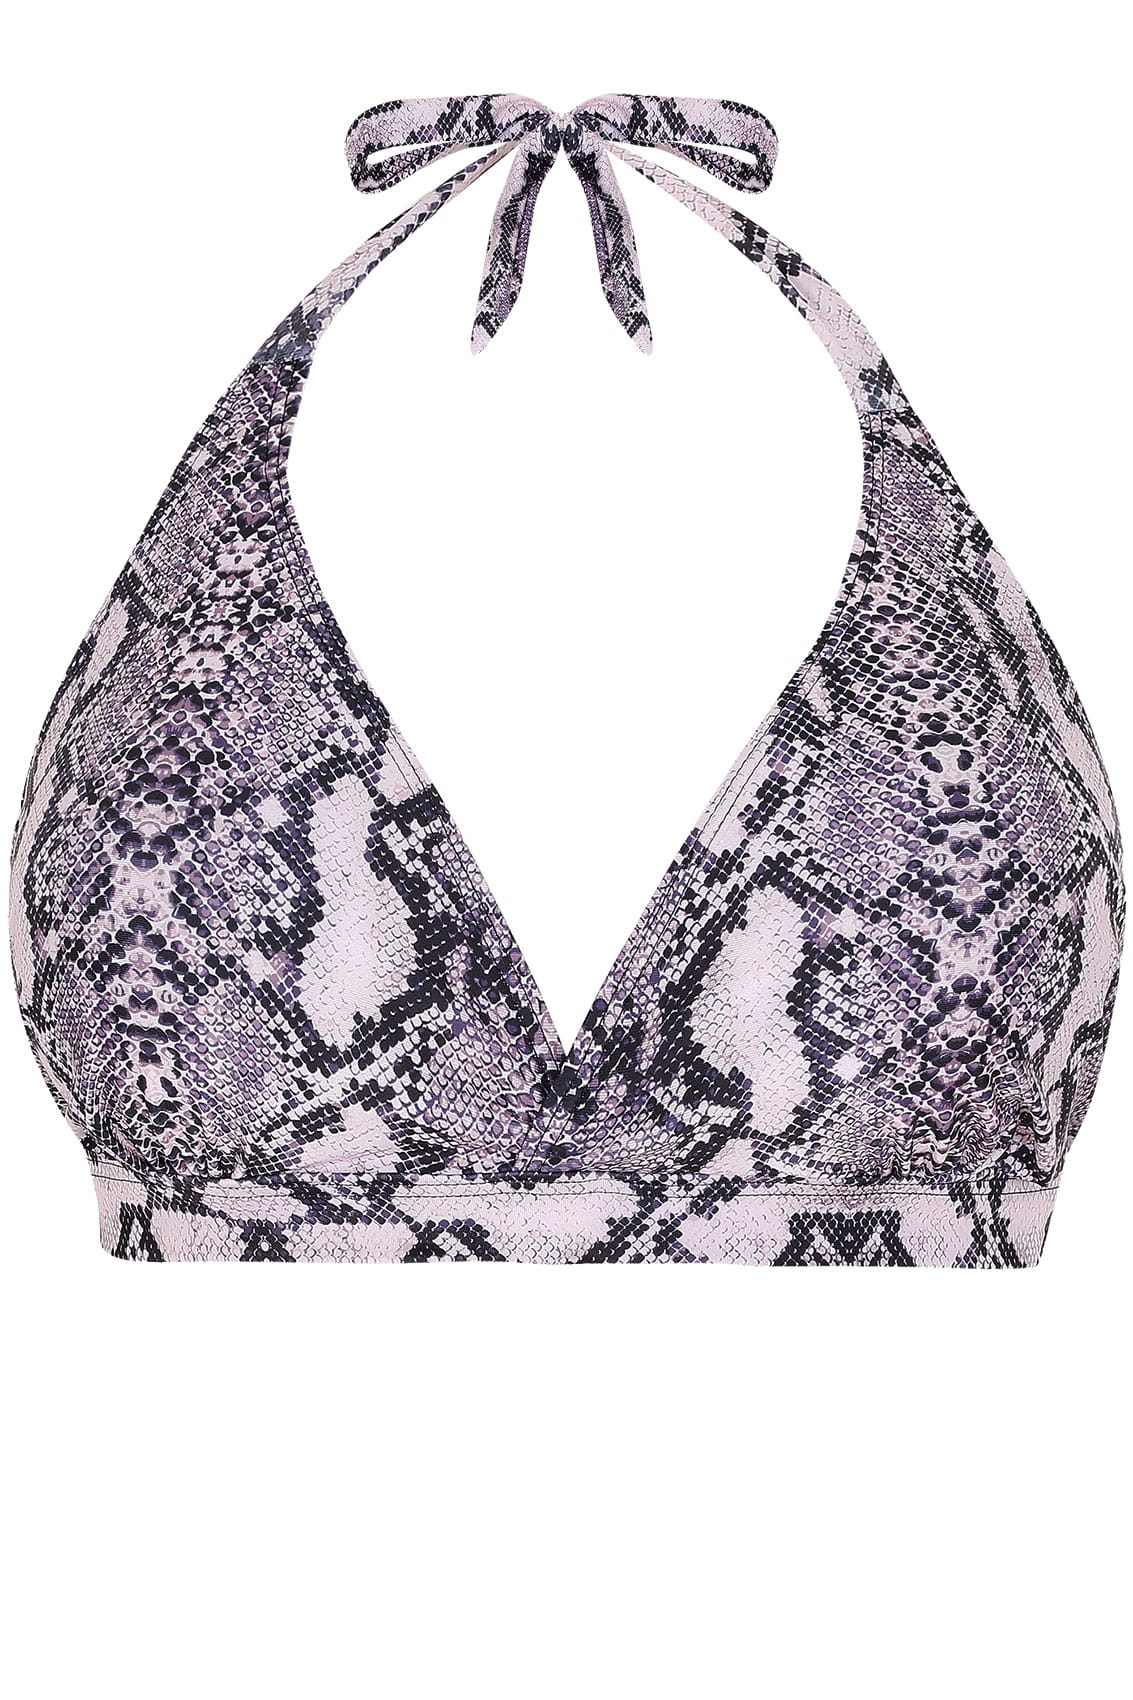 WOLF & WHISTLE Black & Purple Snake Print Bikini Top, Plus size 16 to 26